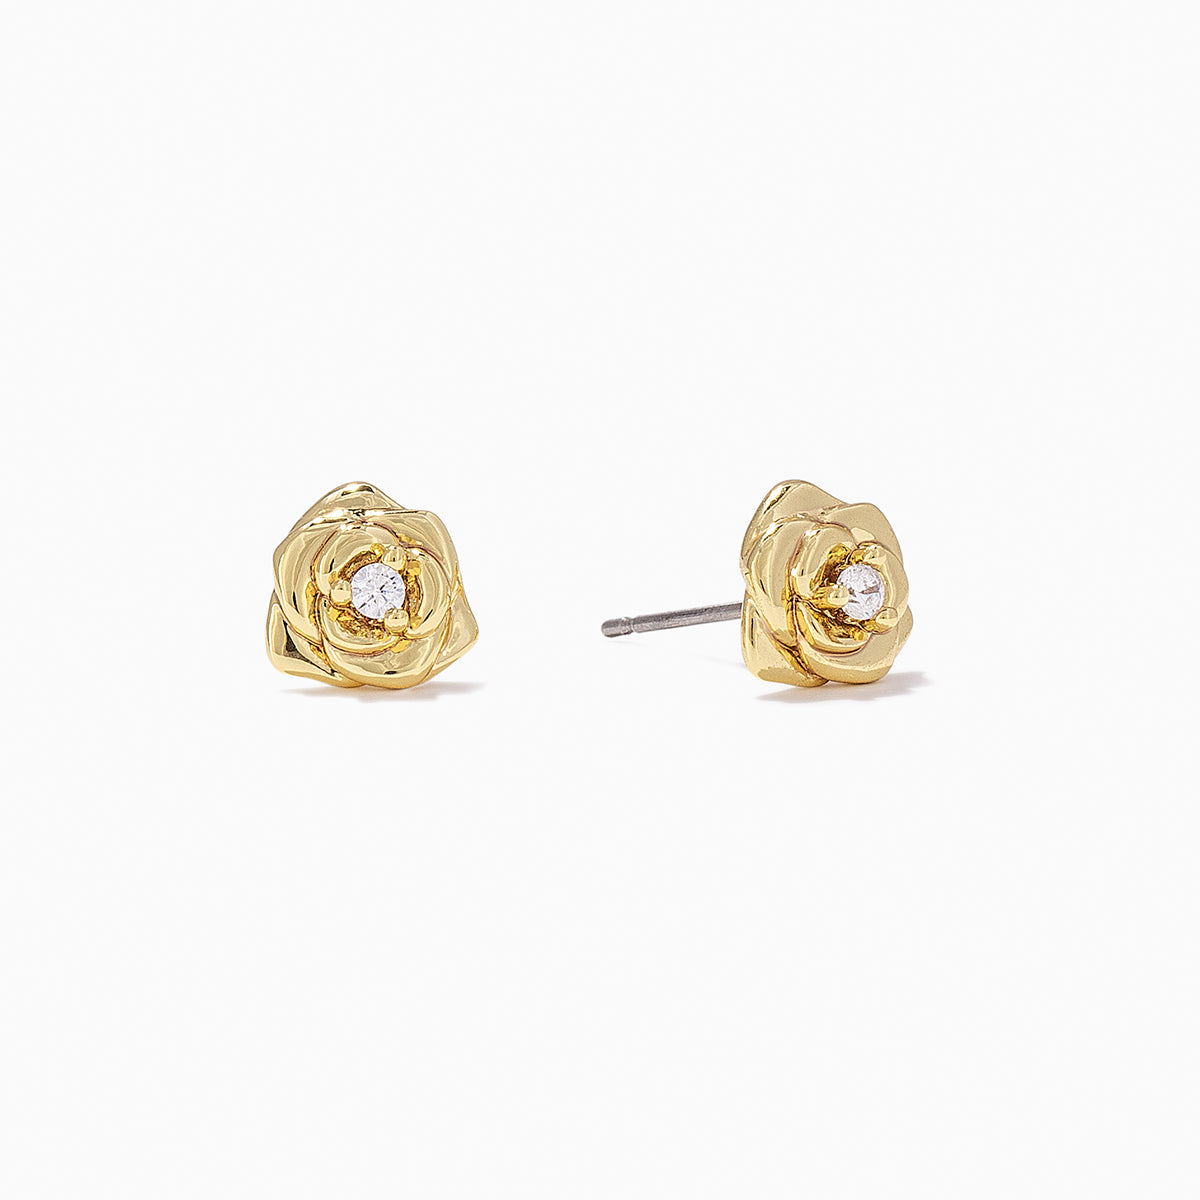 Rose Stud Earrings in Gold, Rose Jewelry